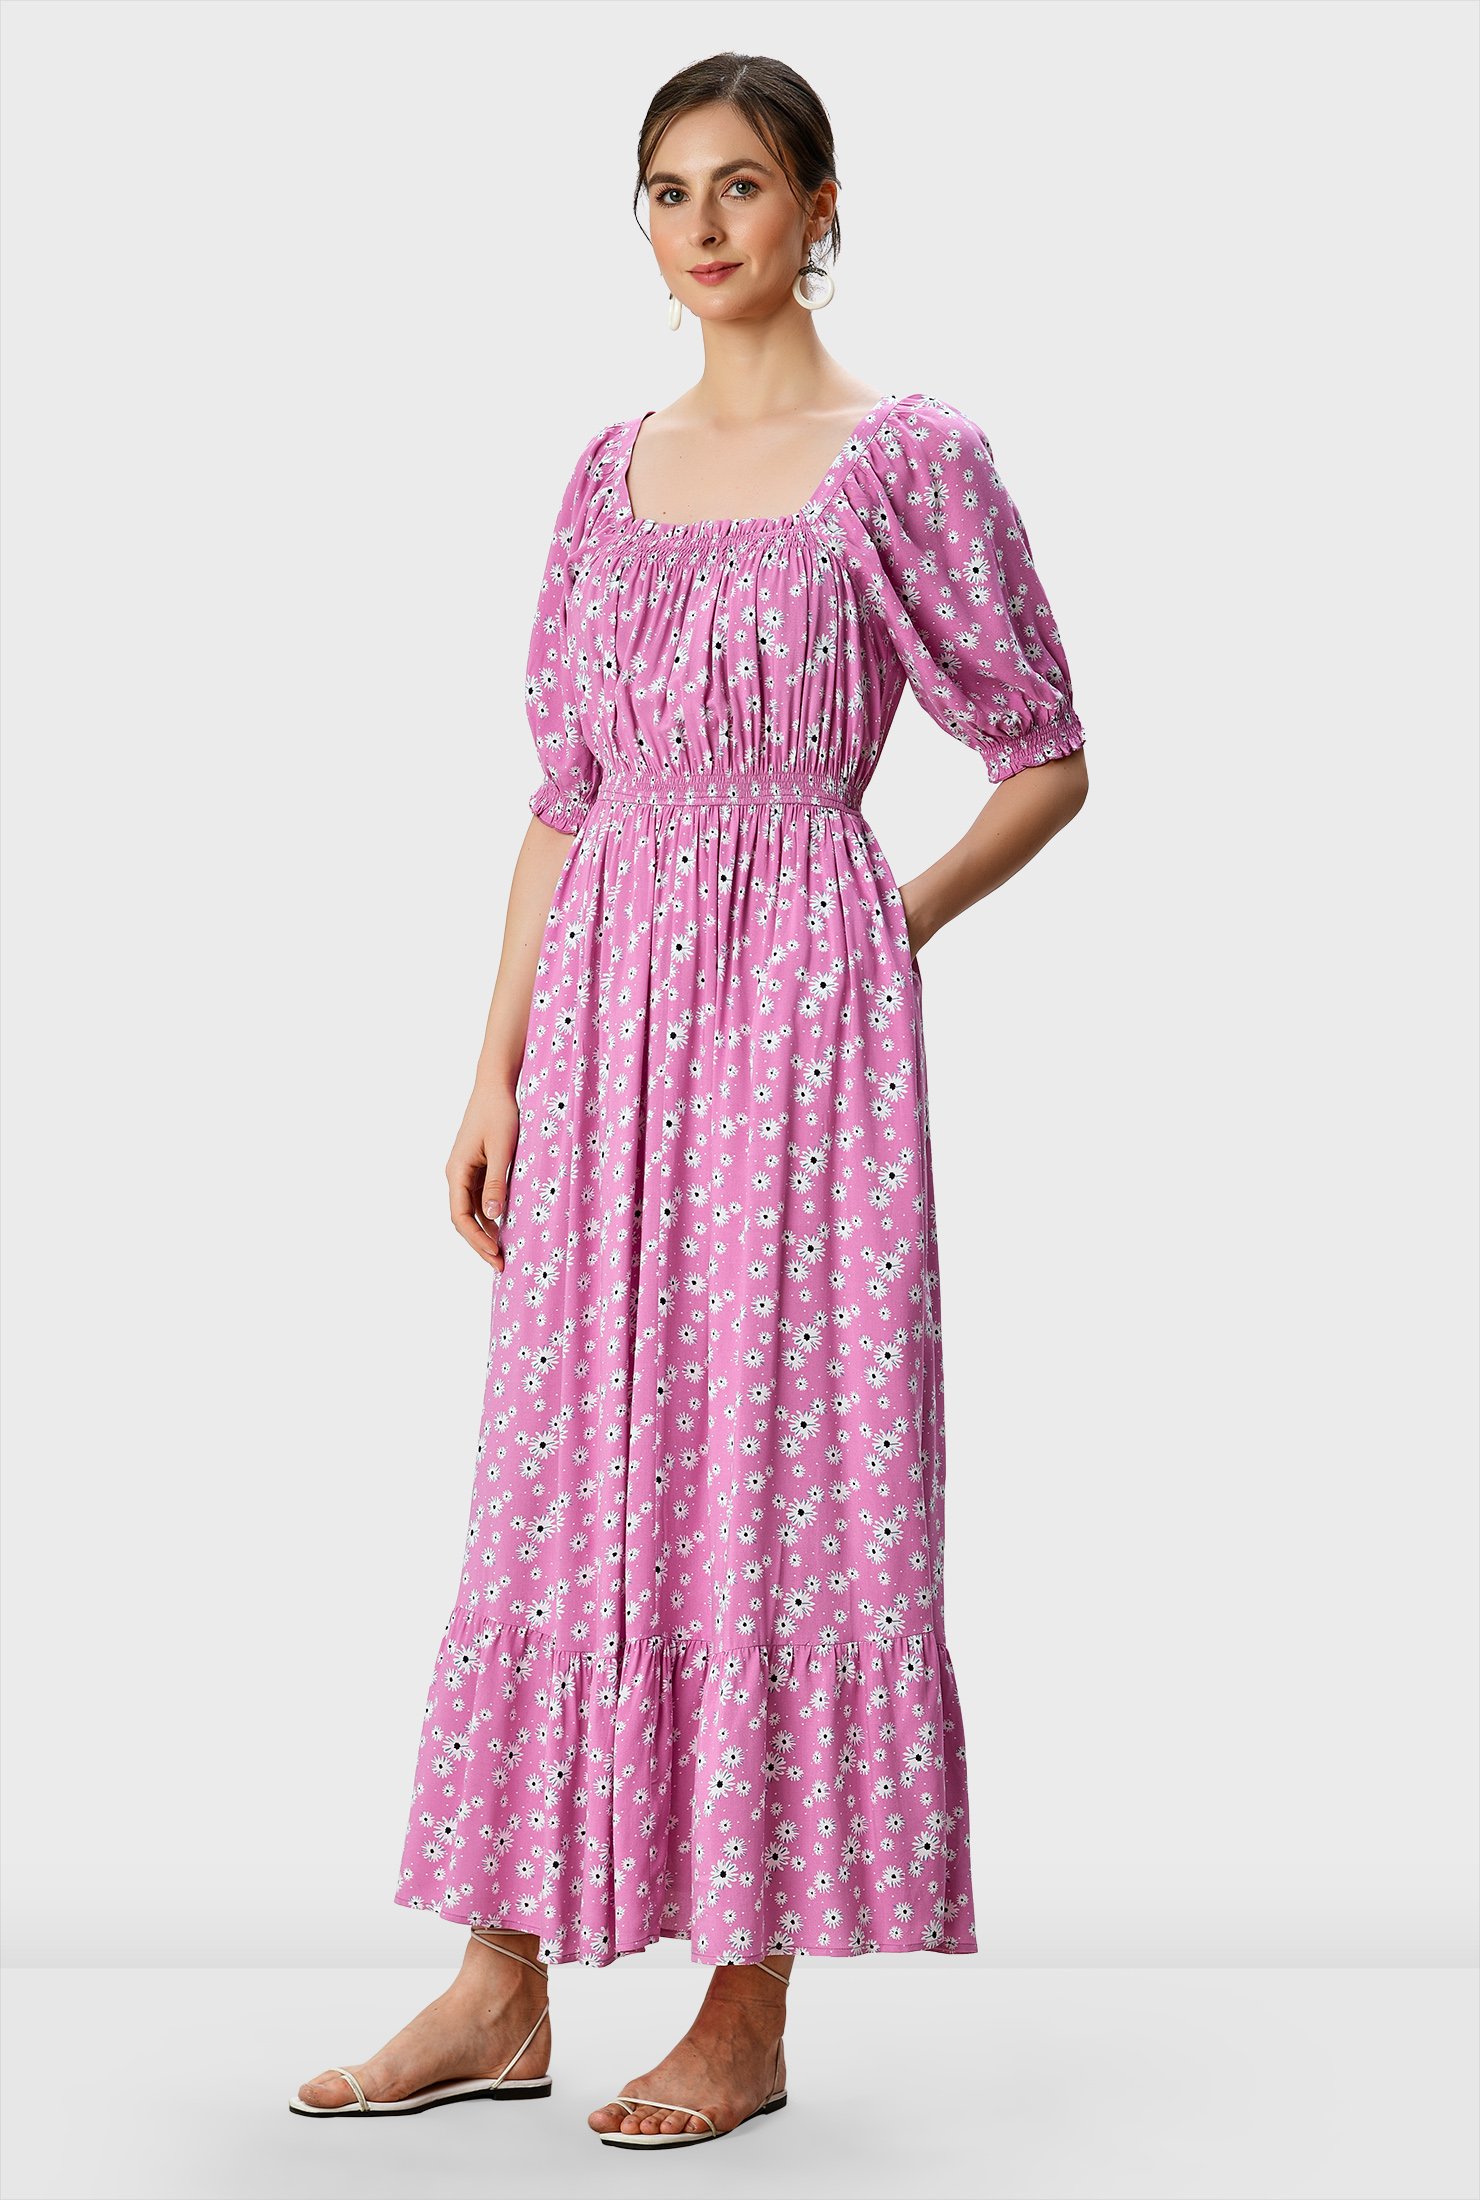 Shop Ruffle flounce floral print smocked dress | eShakti